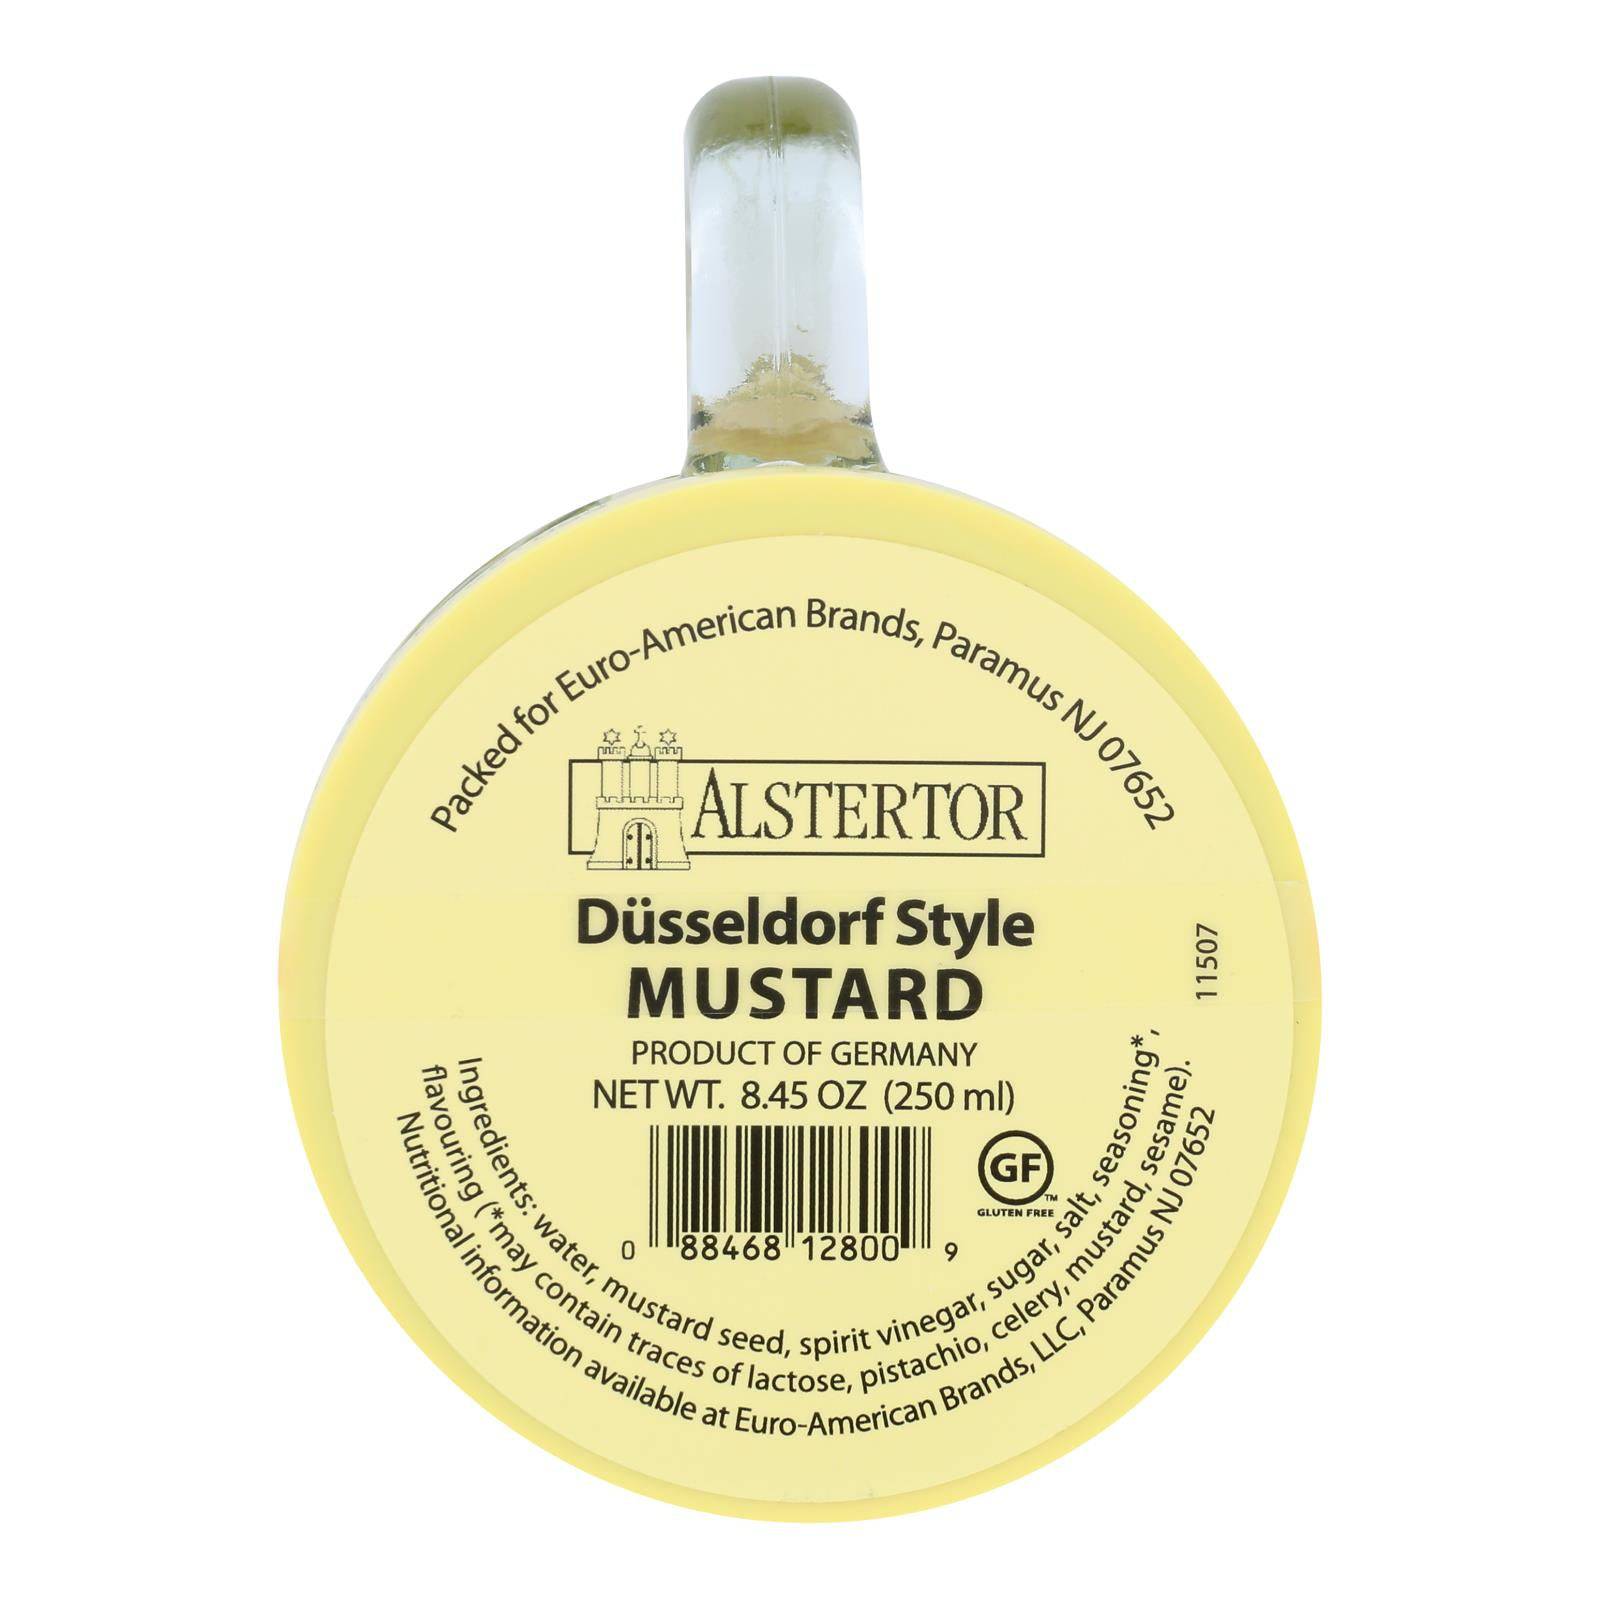 Alstertor Dusseldorf Style Mustard - Case Of 12 - 8.45 Oz. | OnlyNaturals.us